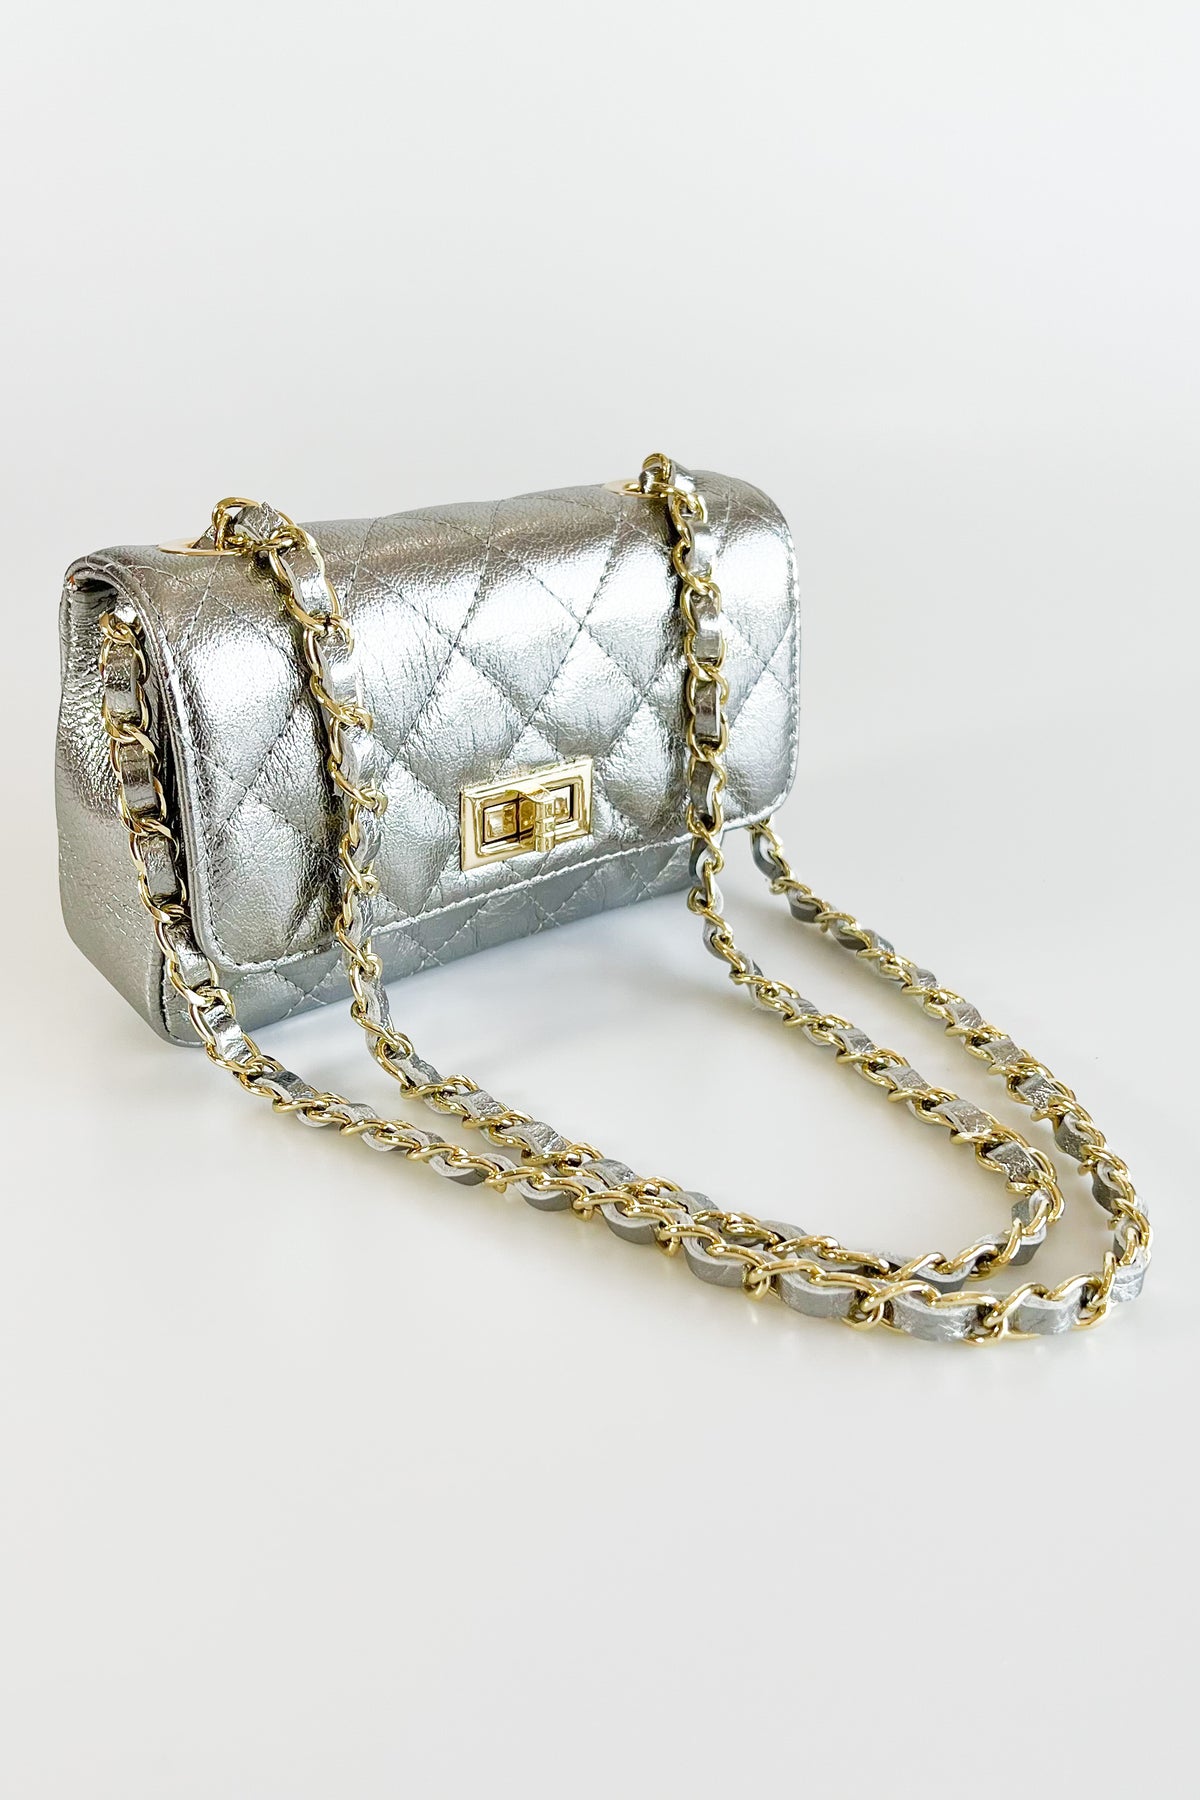 Clear Handbag with Gold Chain- Florida